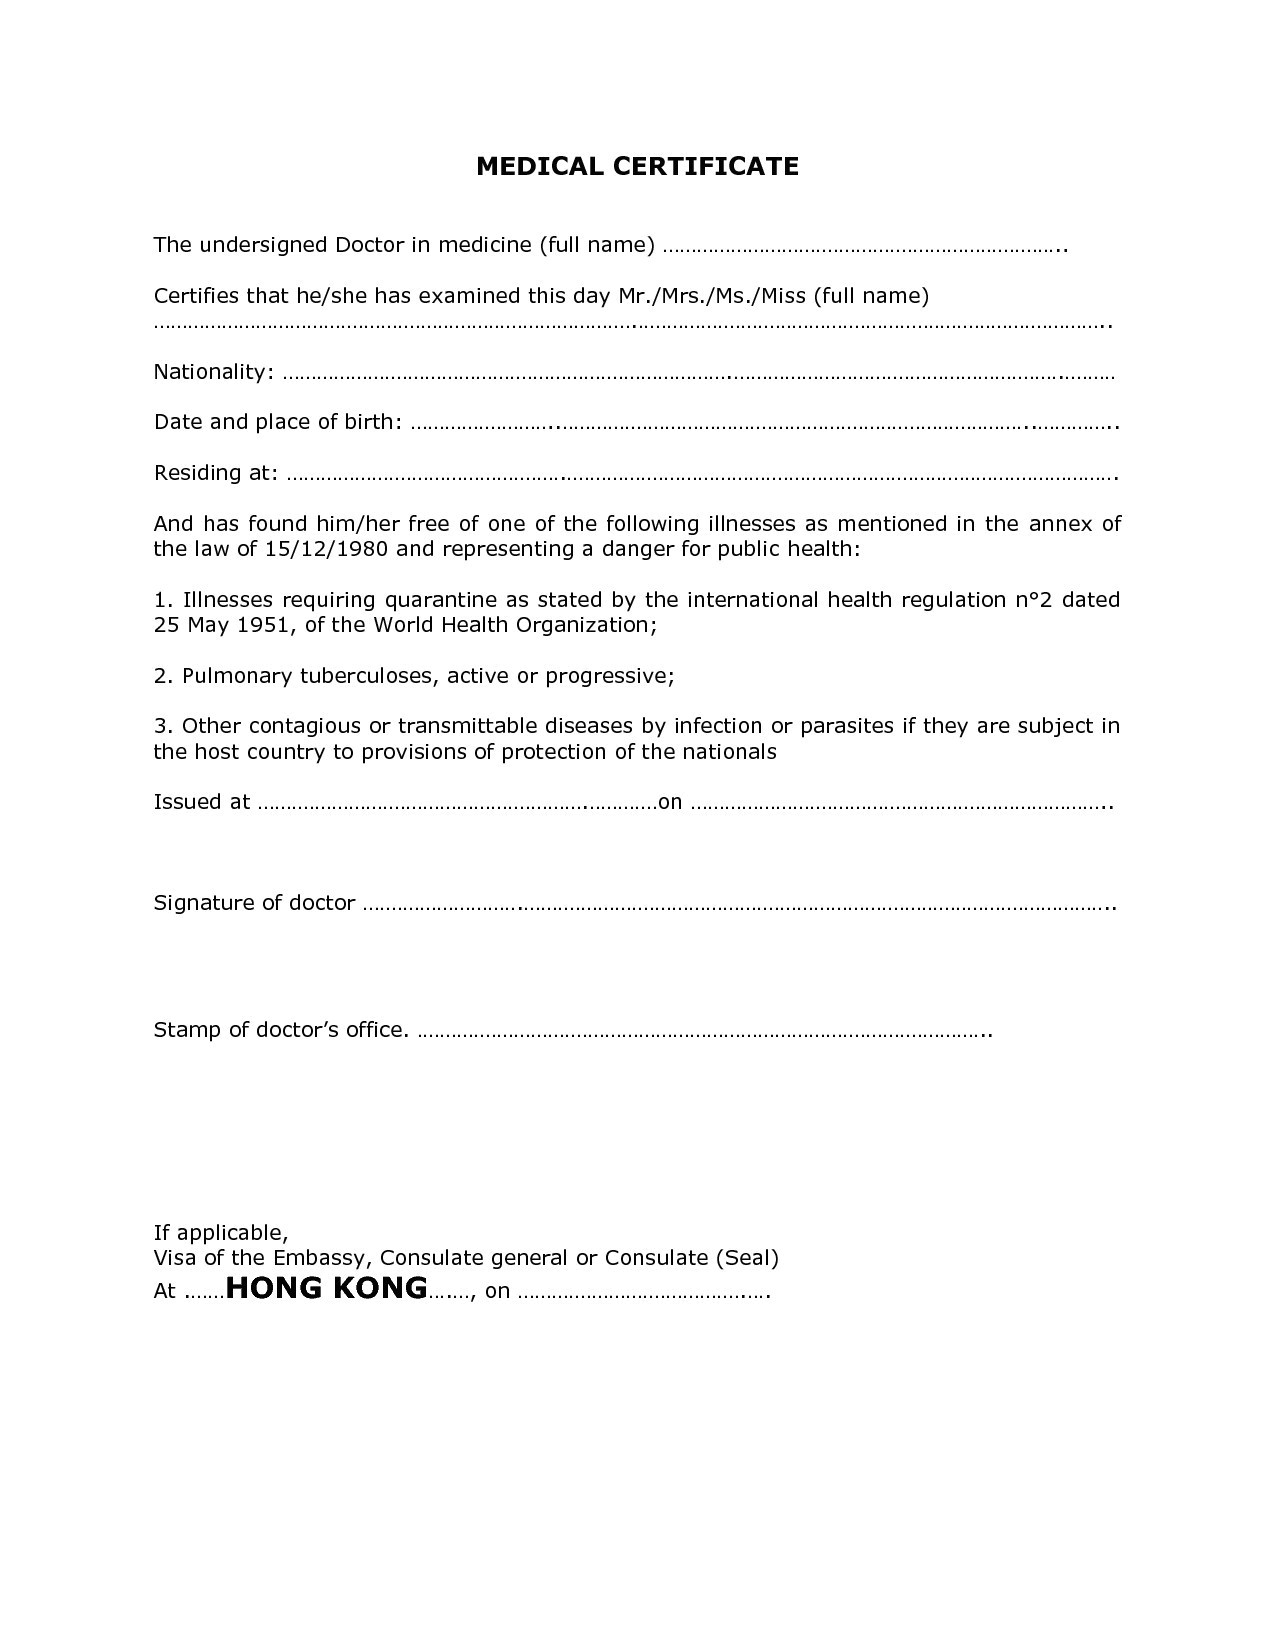 centrelink medical certificate template centrelink medical certificate form download archives pictures of